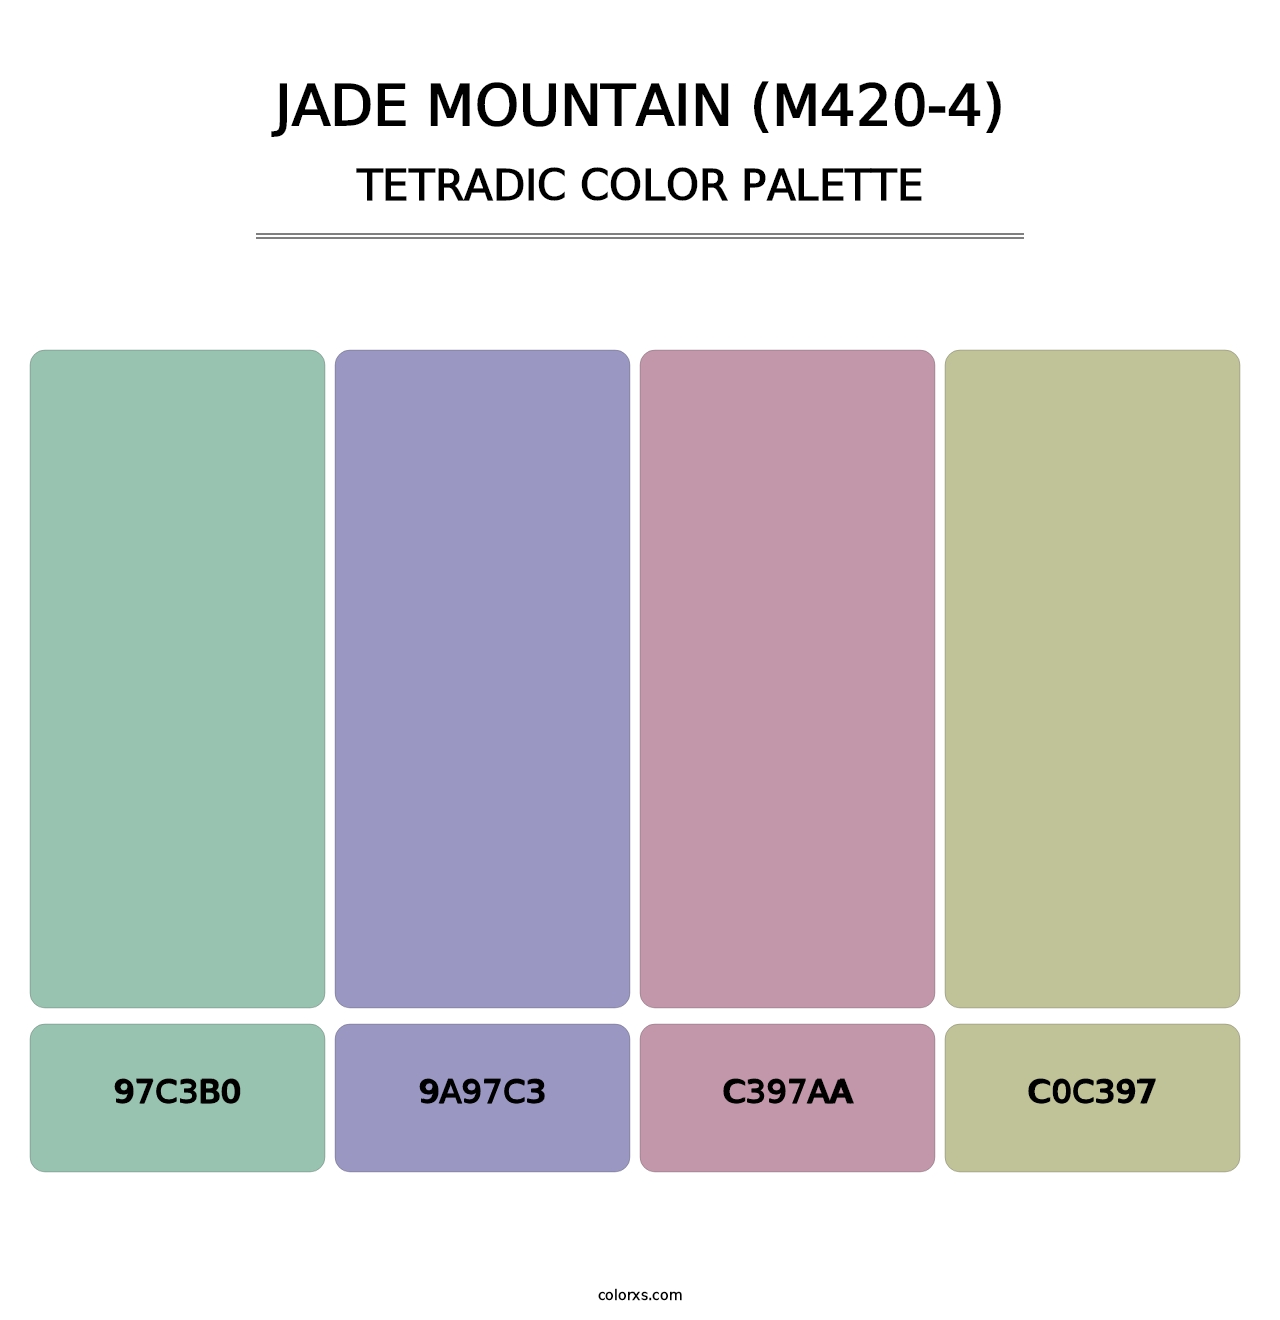 Jade Mountain (M420-4) - Tetradic Color Palette